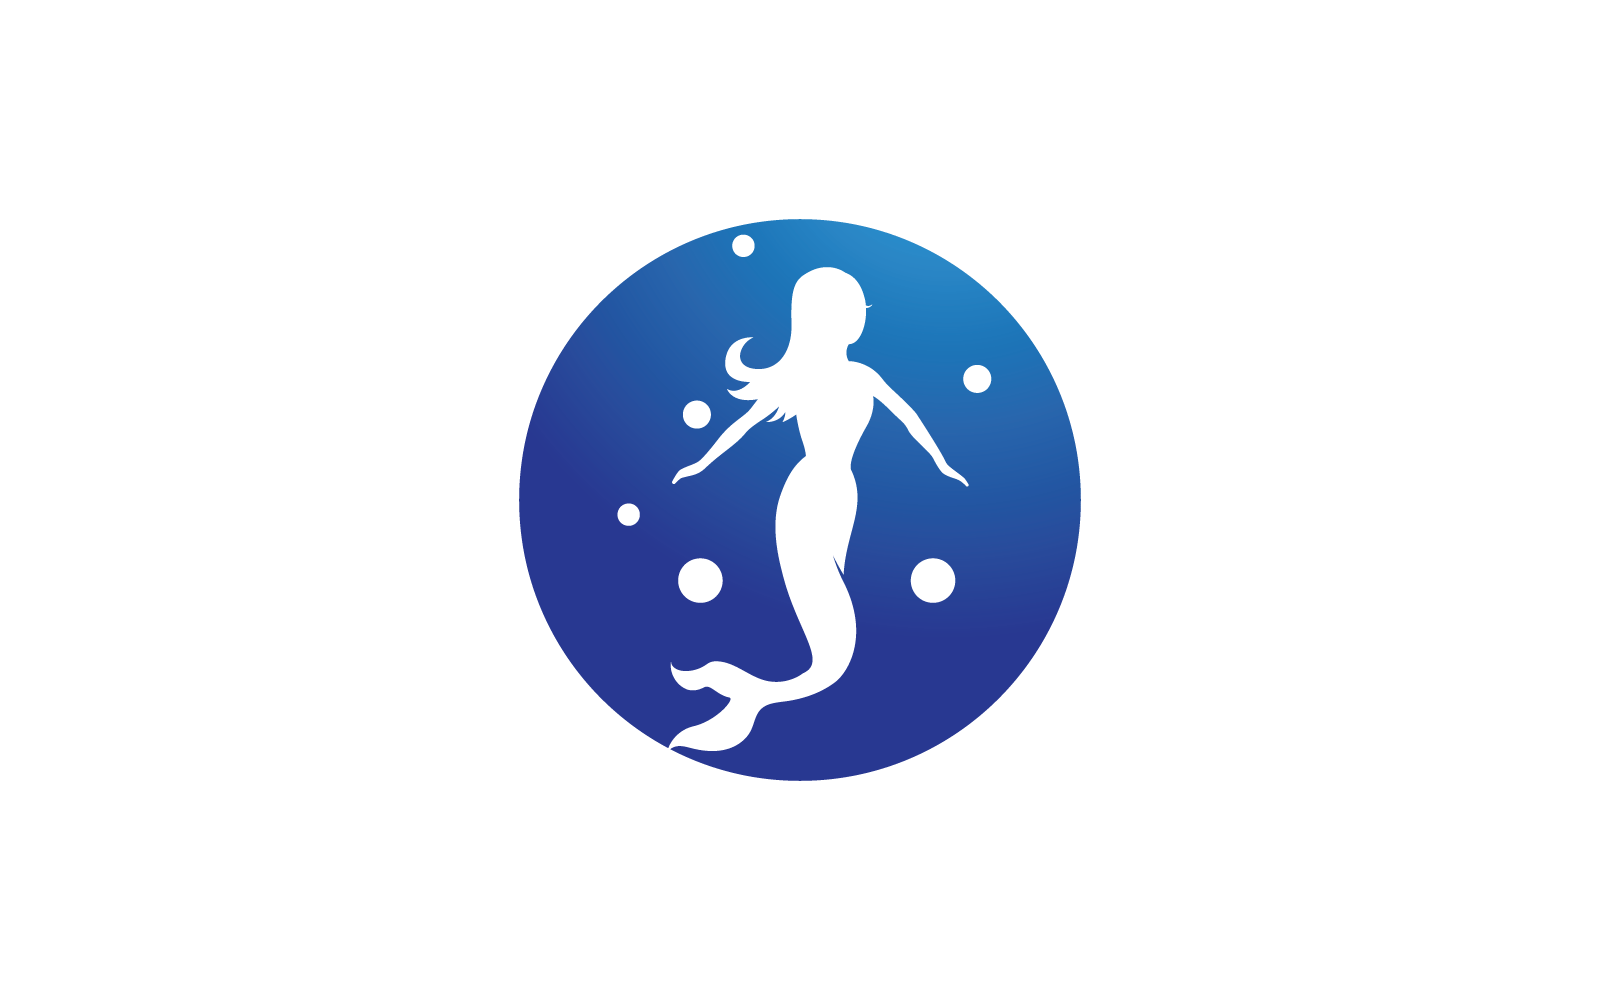 Mermaid illustration design vector template